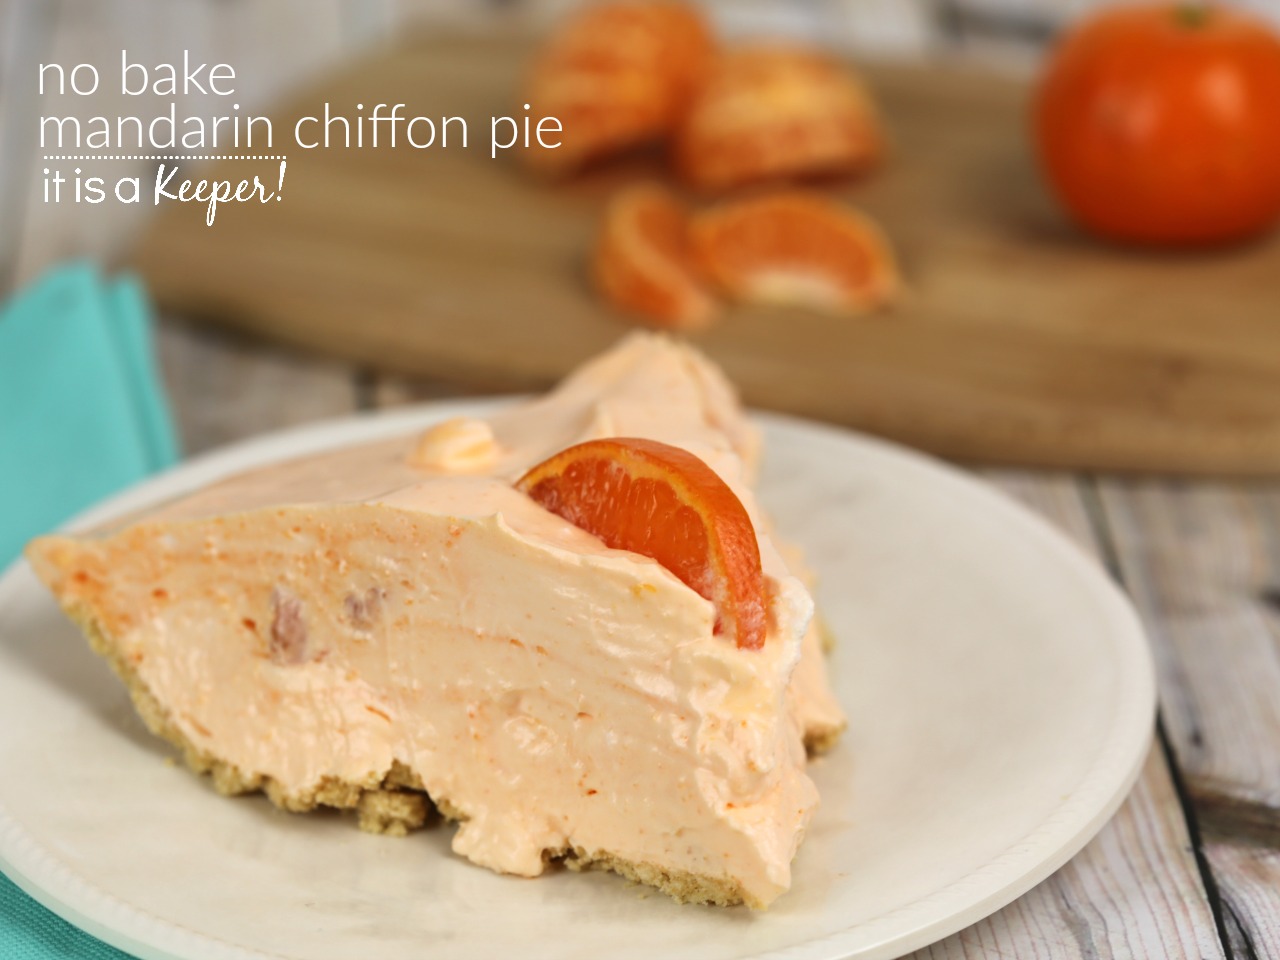 No Bake Mandarin Chiffon Pie - This easy no bake pie recipe is one of my favorite easy desserts 